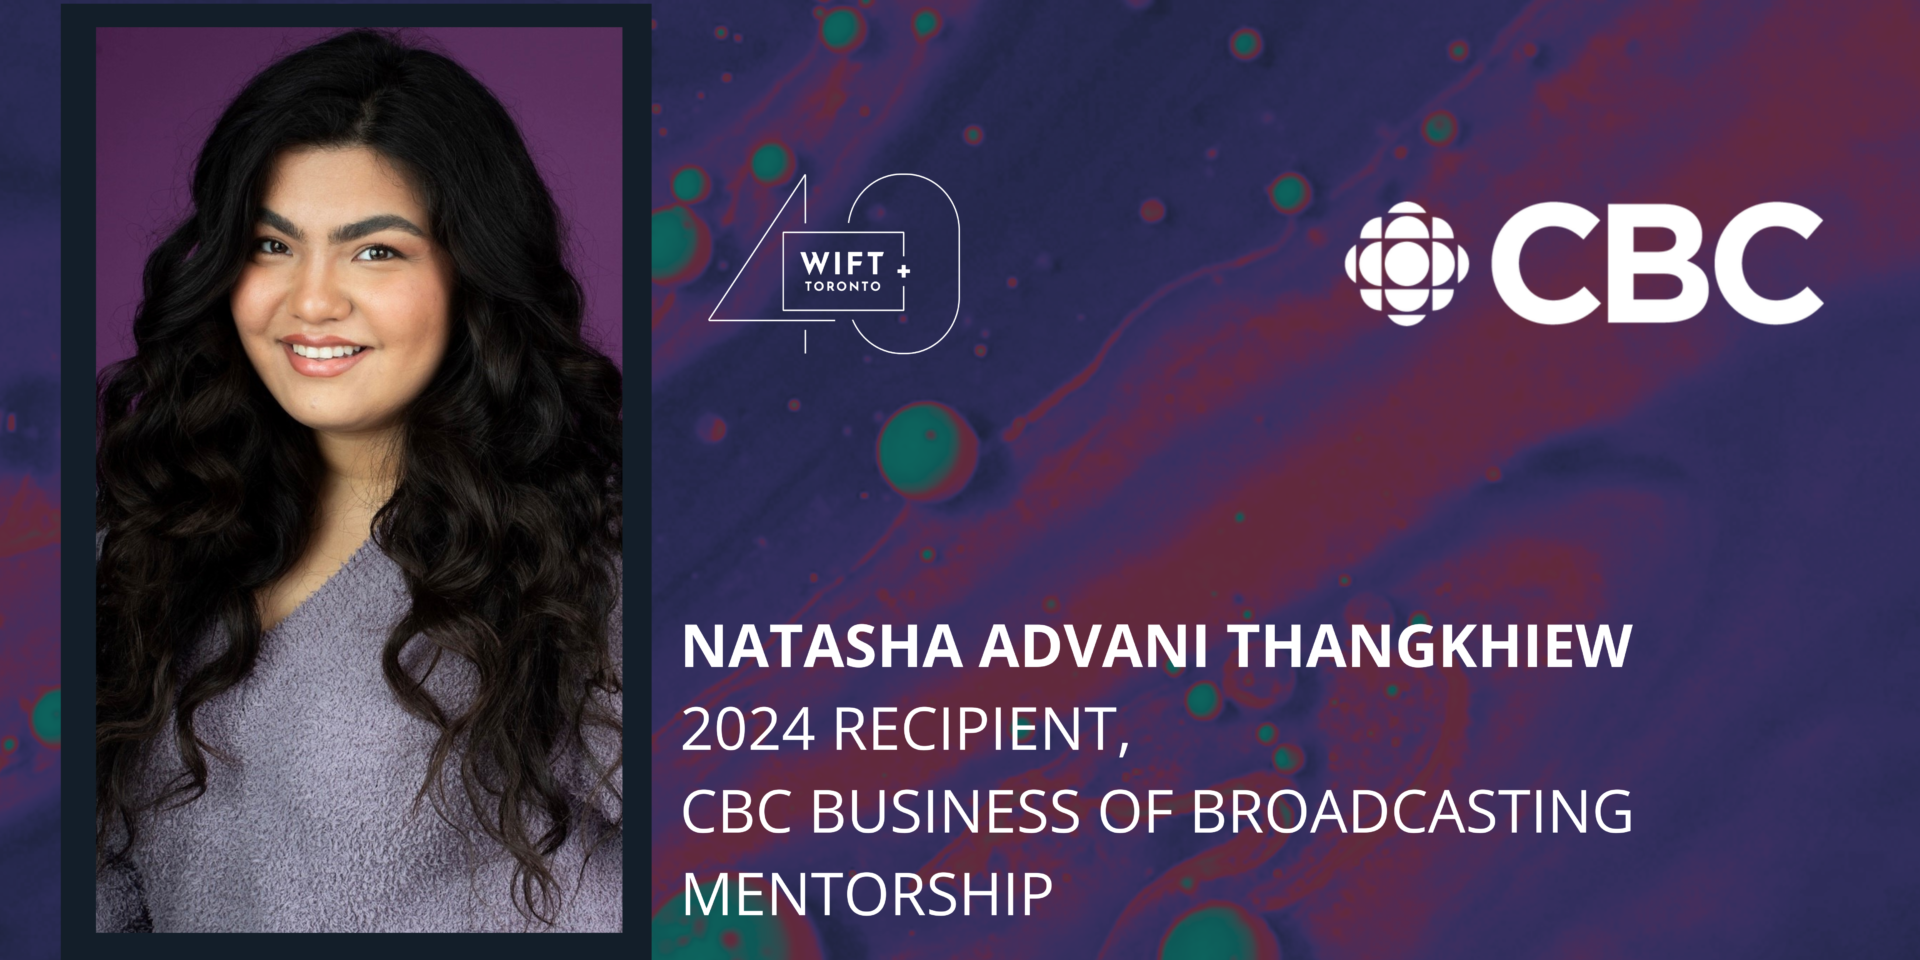 Natasha Advani Thangkhiew awarded the 2024 CBC Business of Broadcasting Mentorship